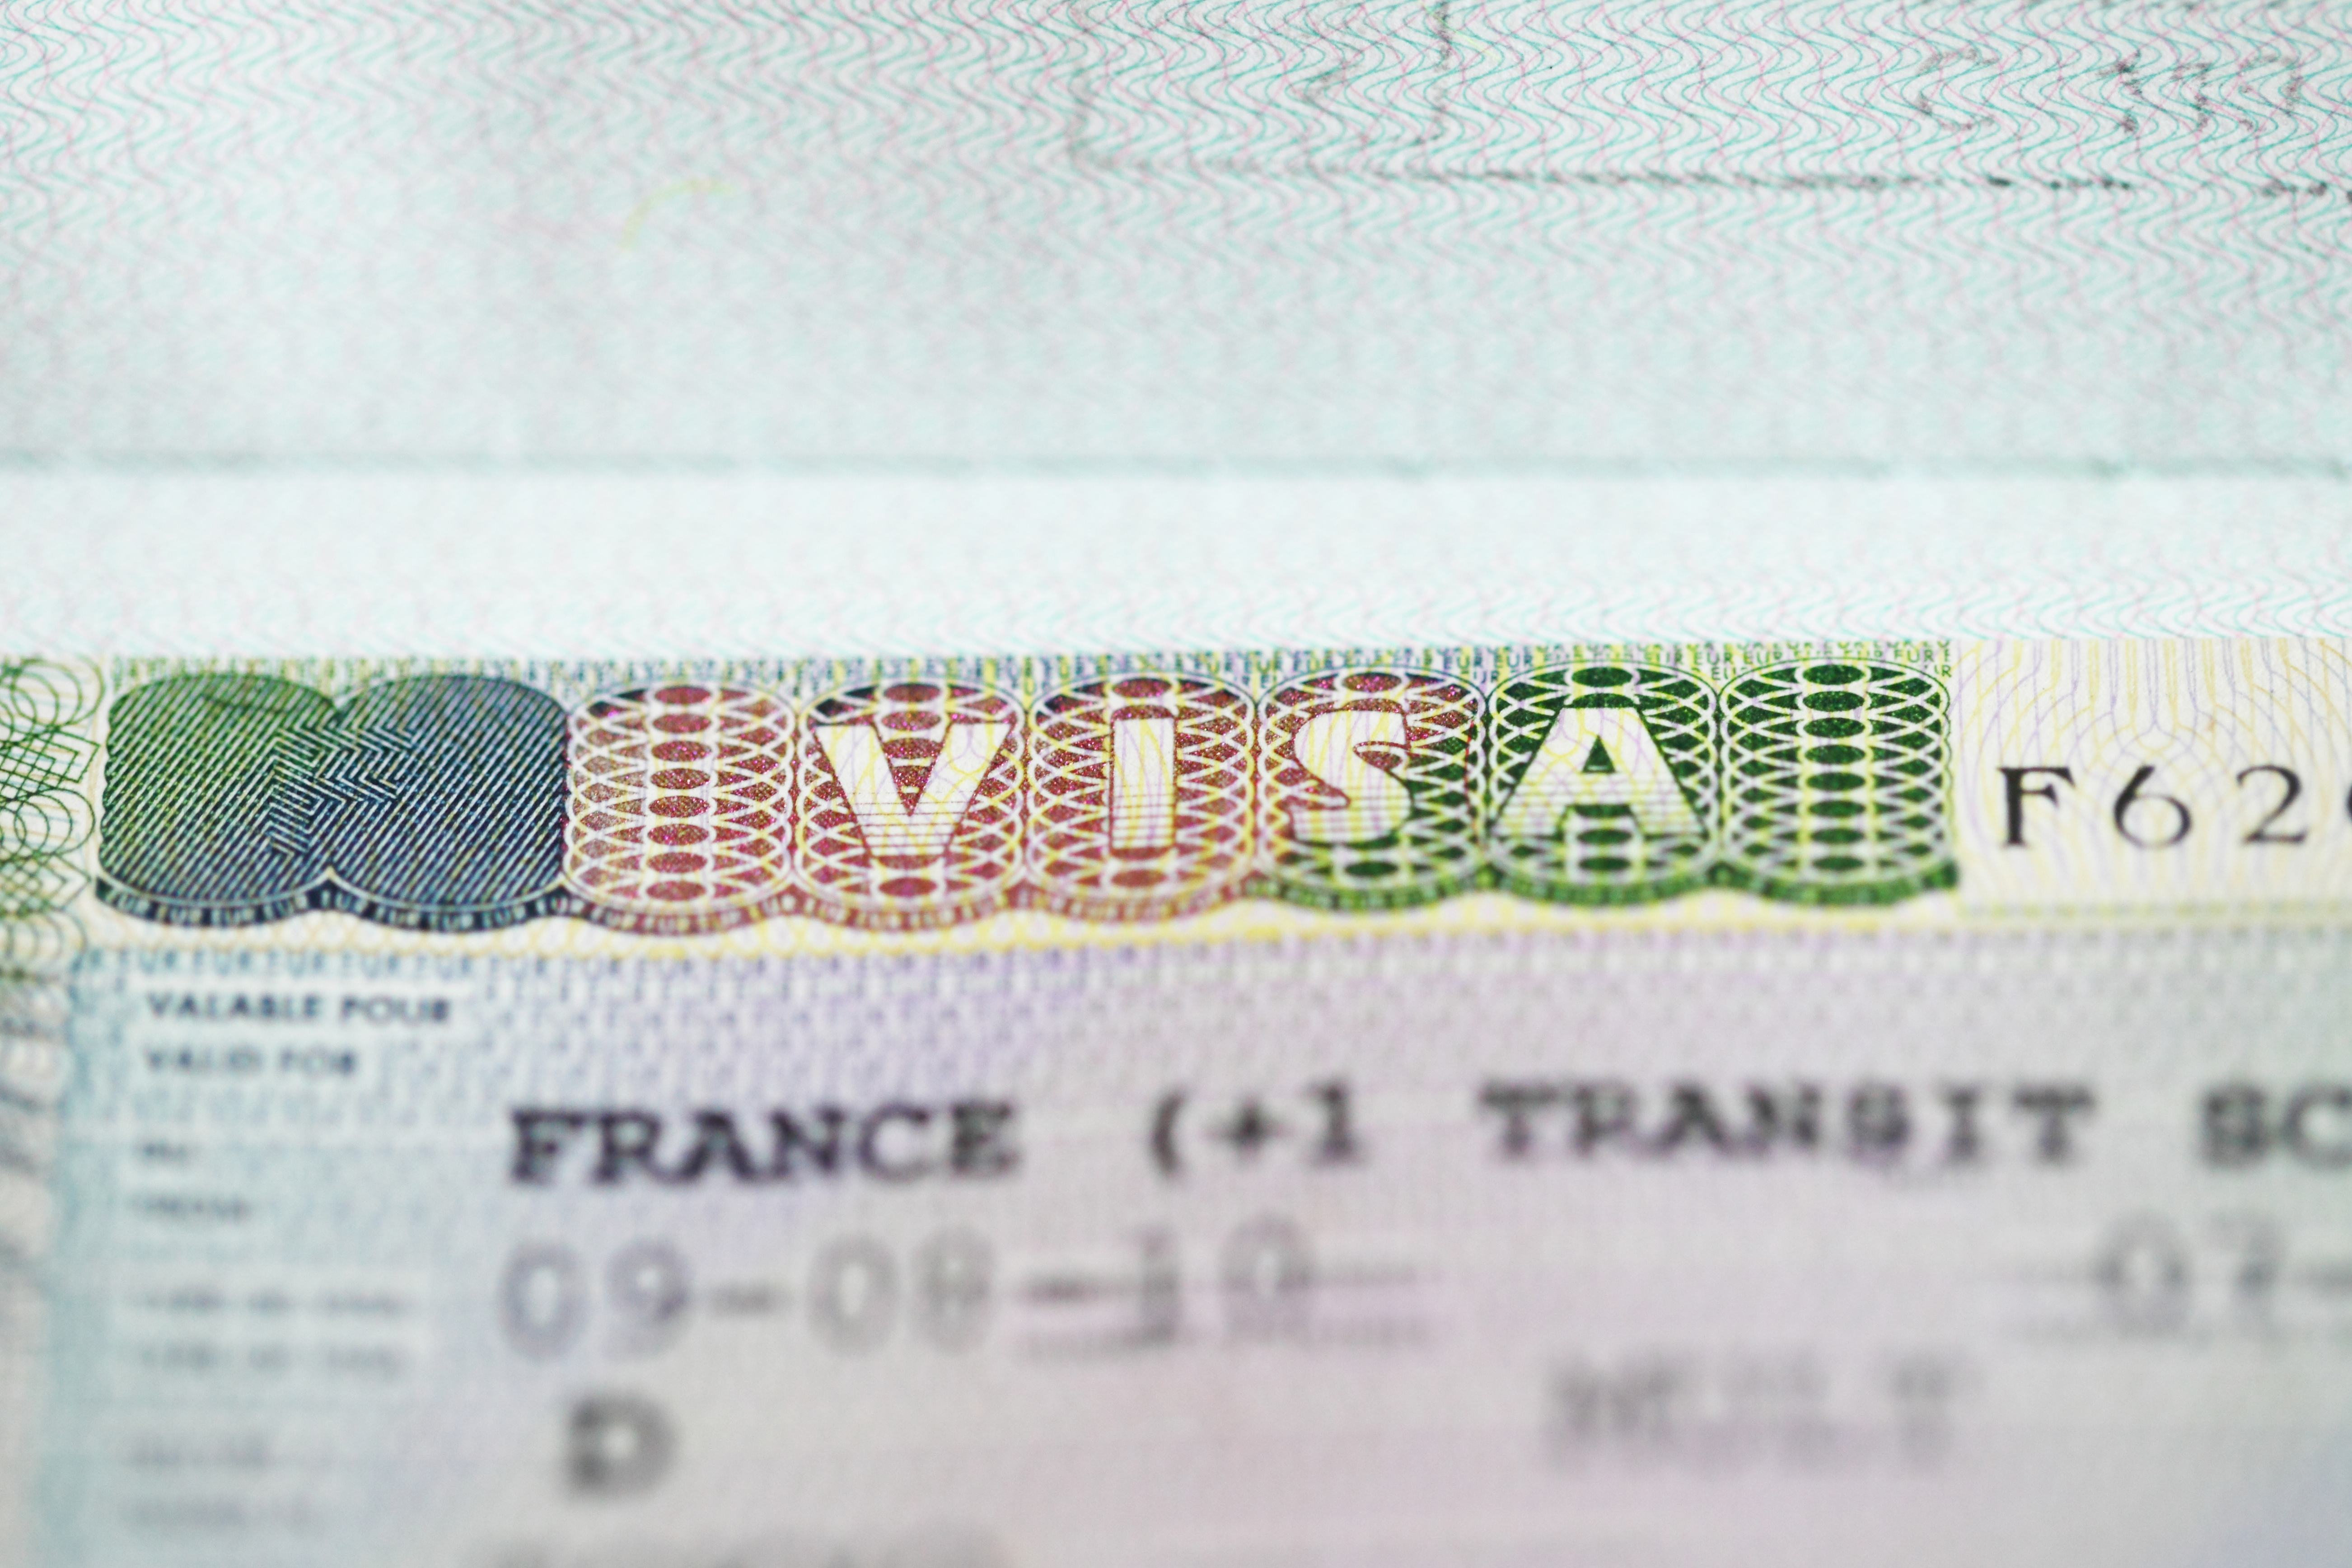 Tourist visa to France